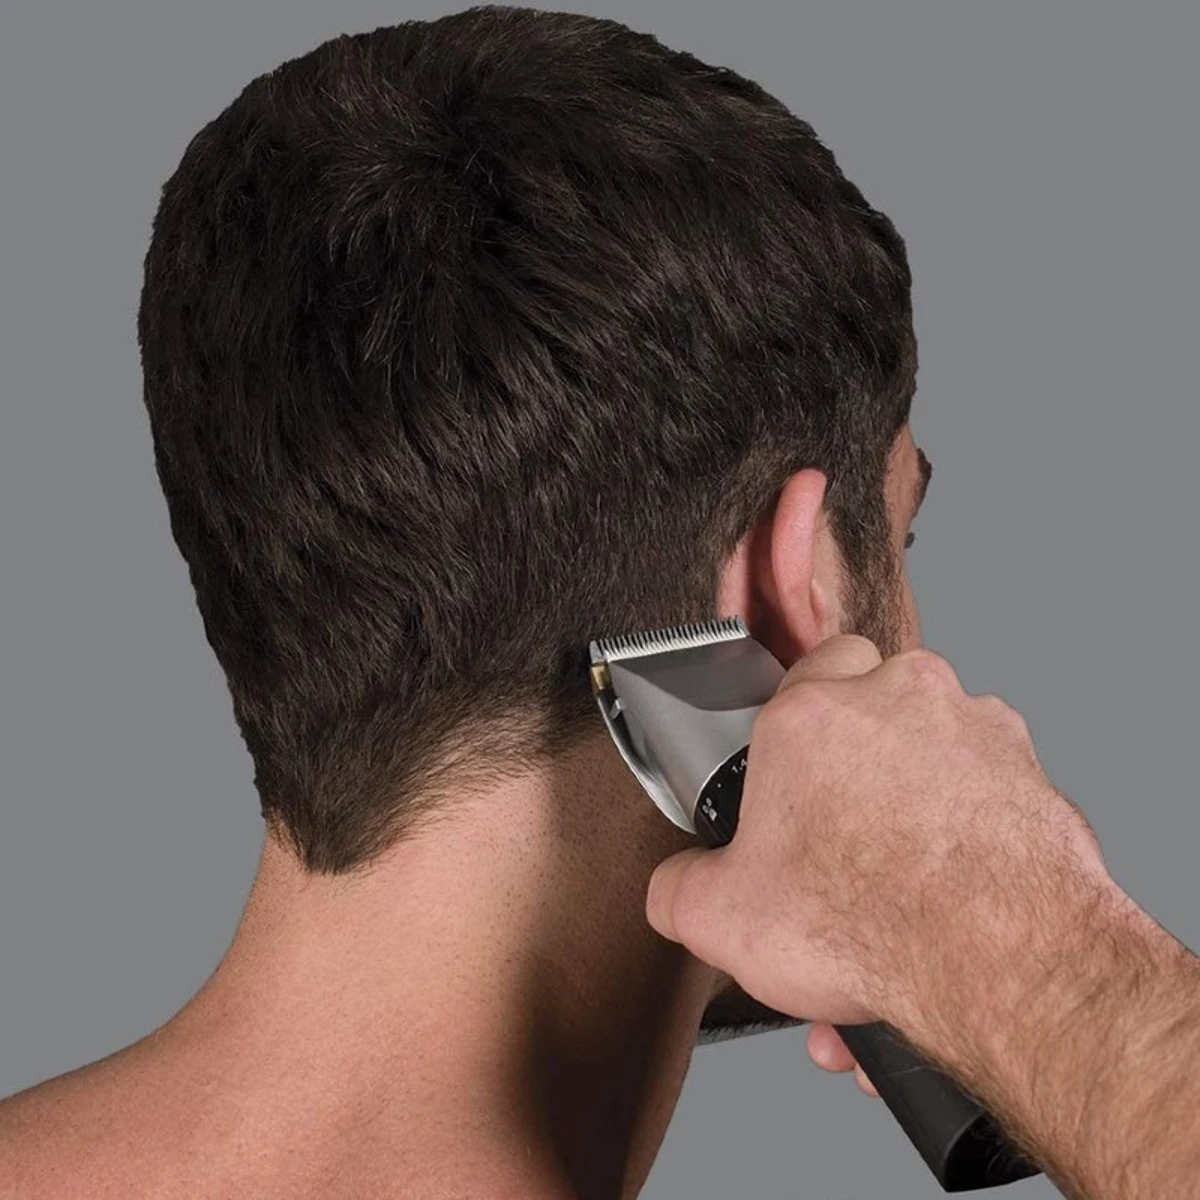 Afeitadora de cabeza, afeitadoras eléctricas para hombres, carga USB y  largo tiempo de uso continuo